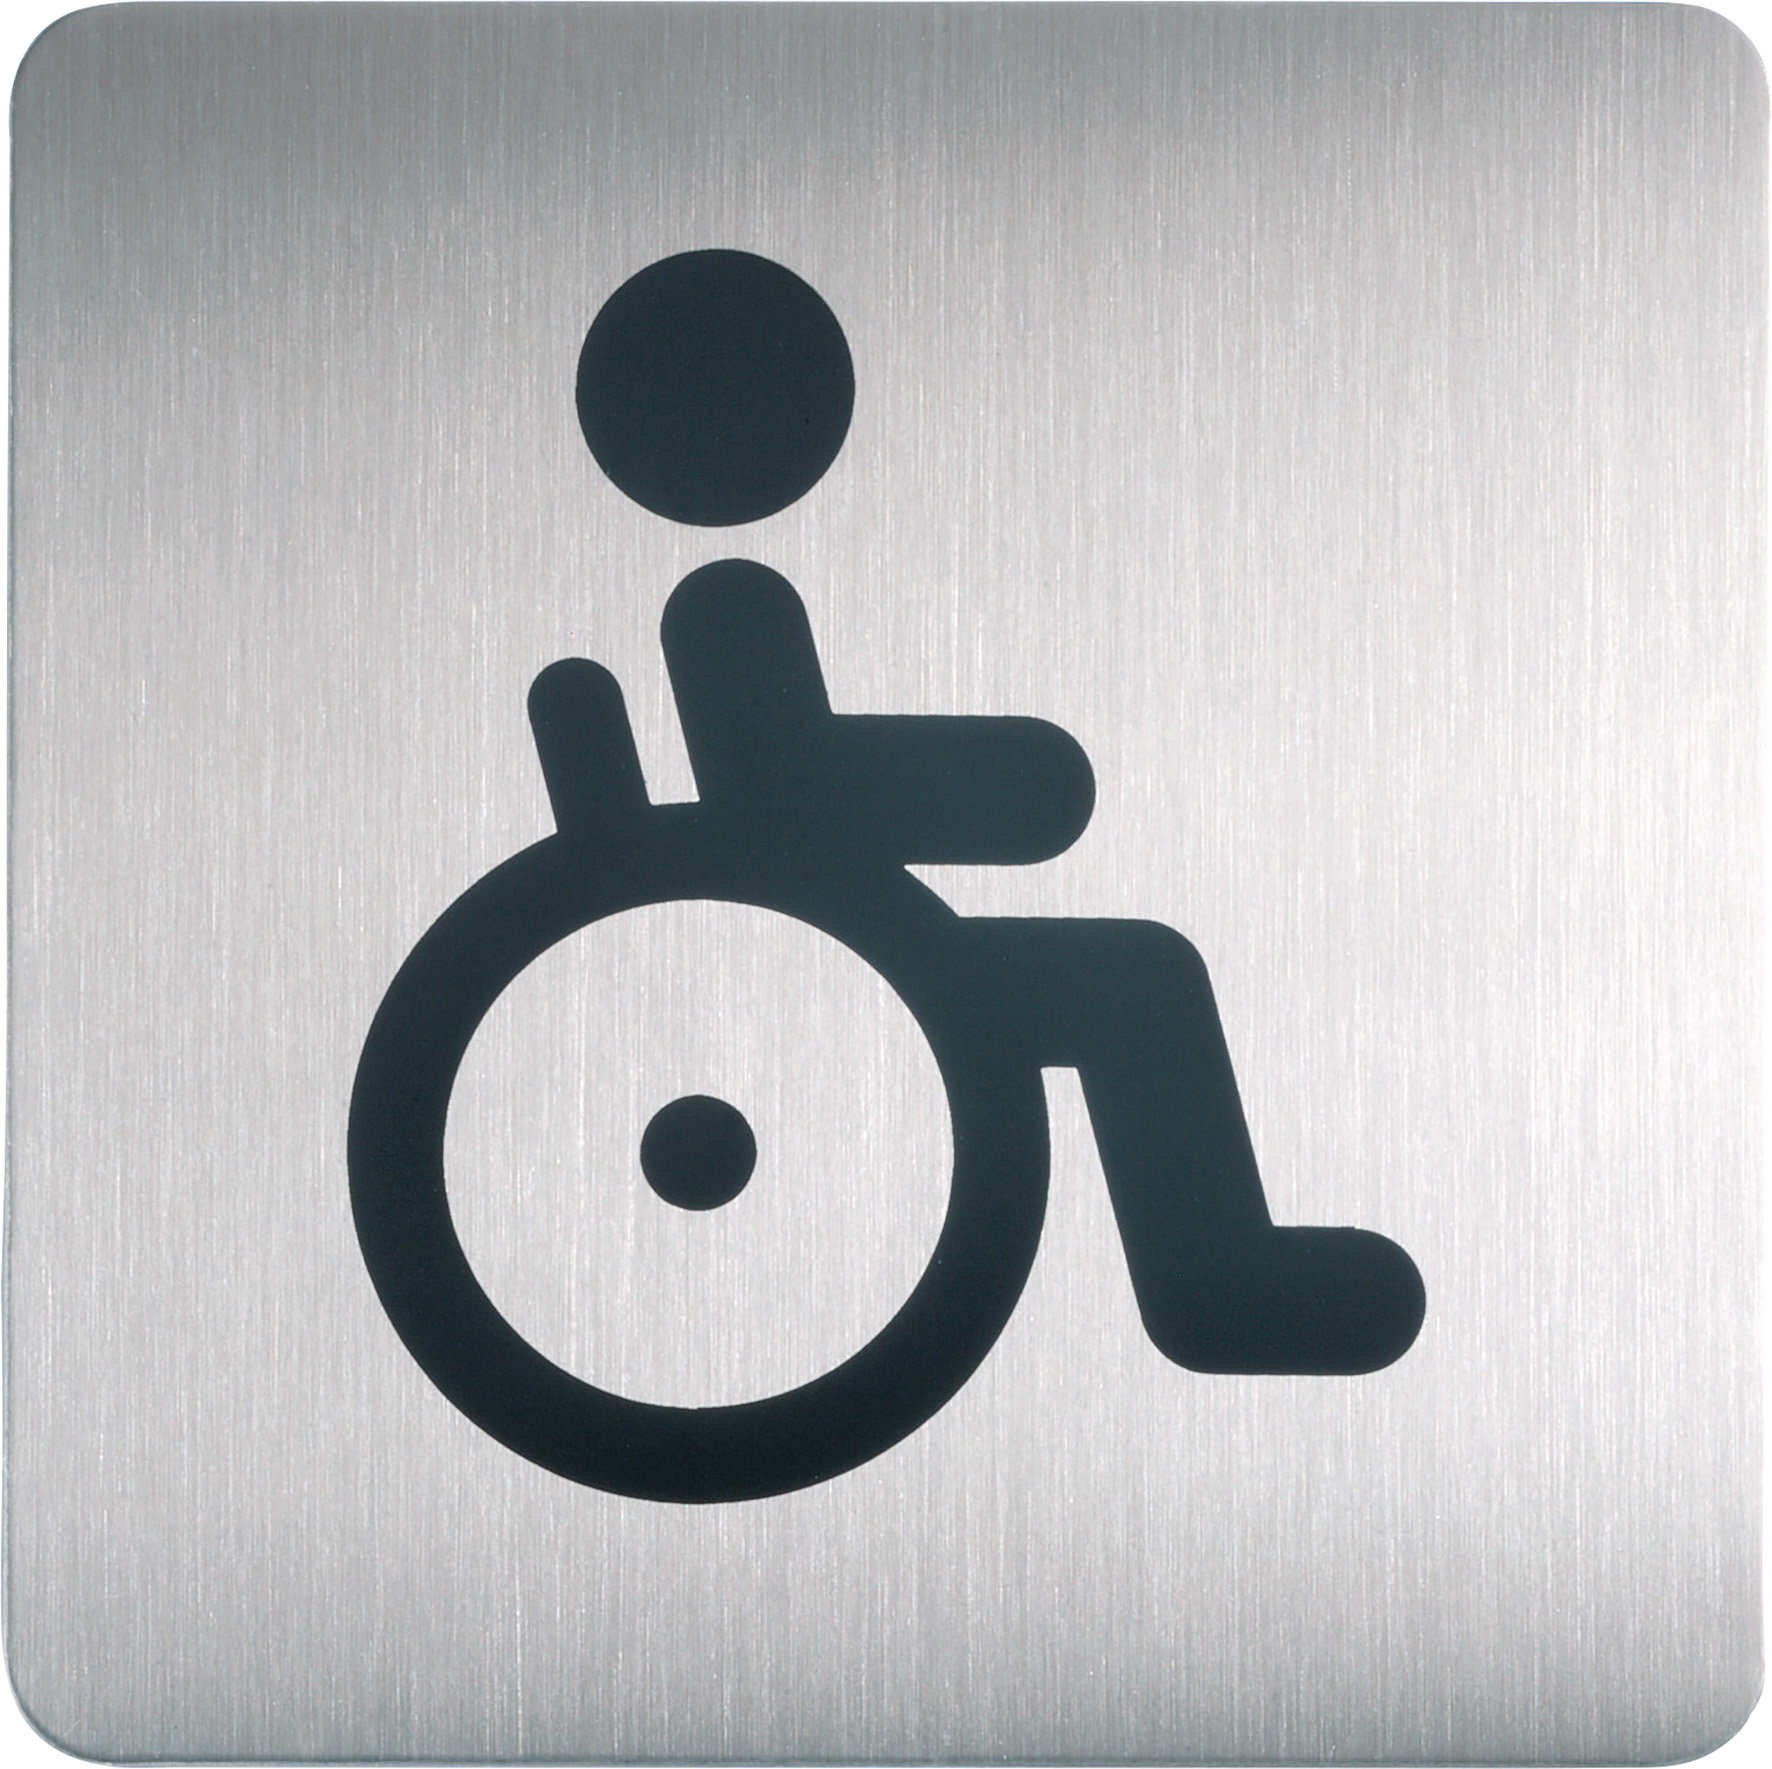 [8552910] Symbolskylt WC handikapp